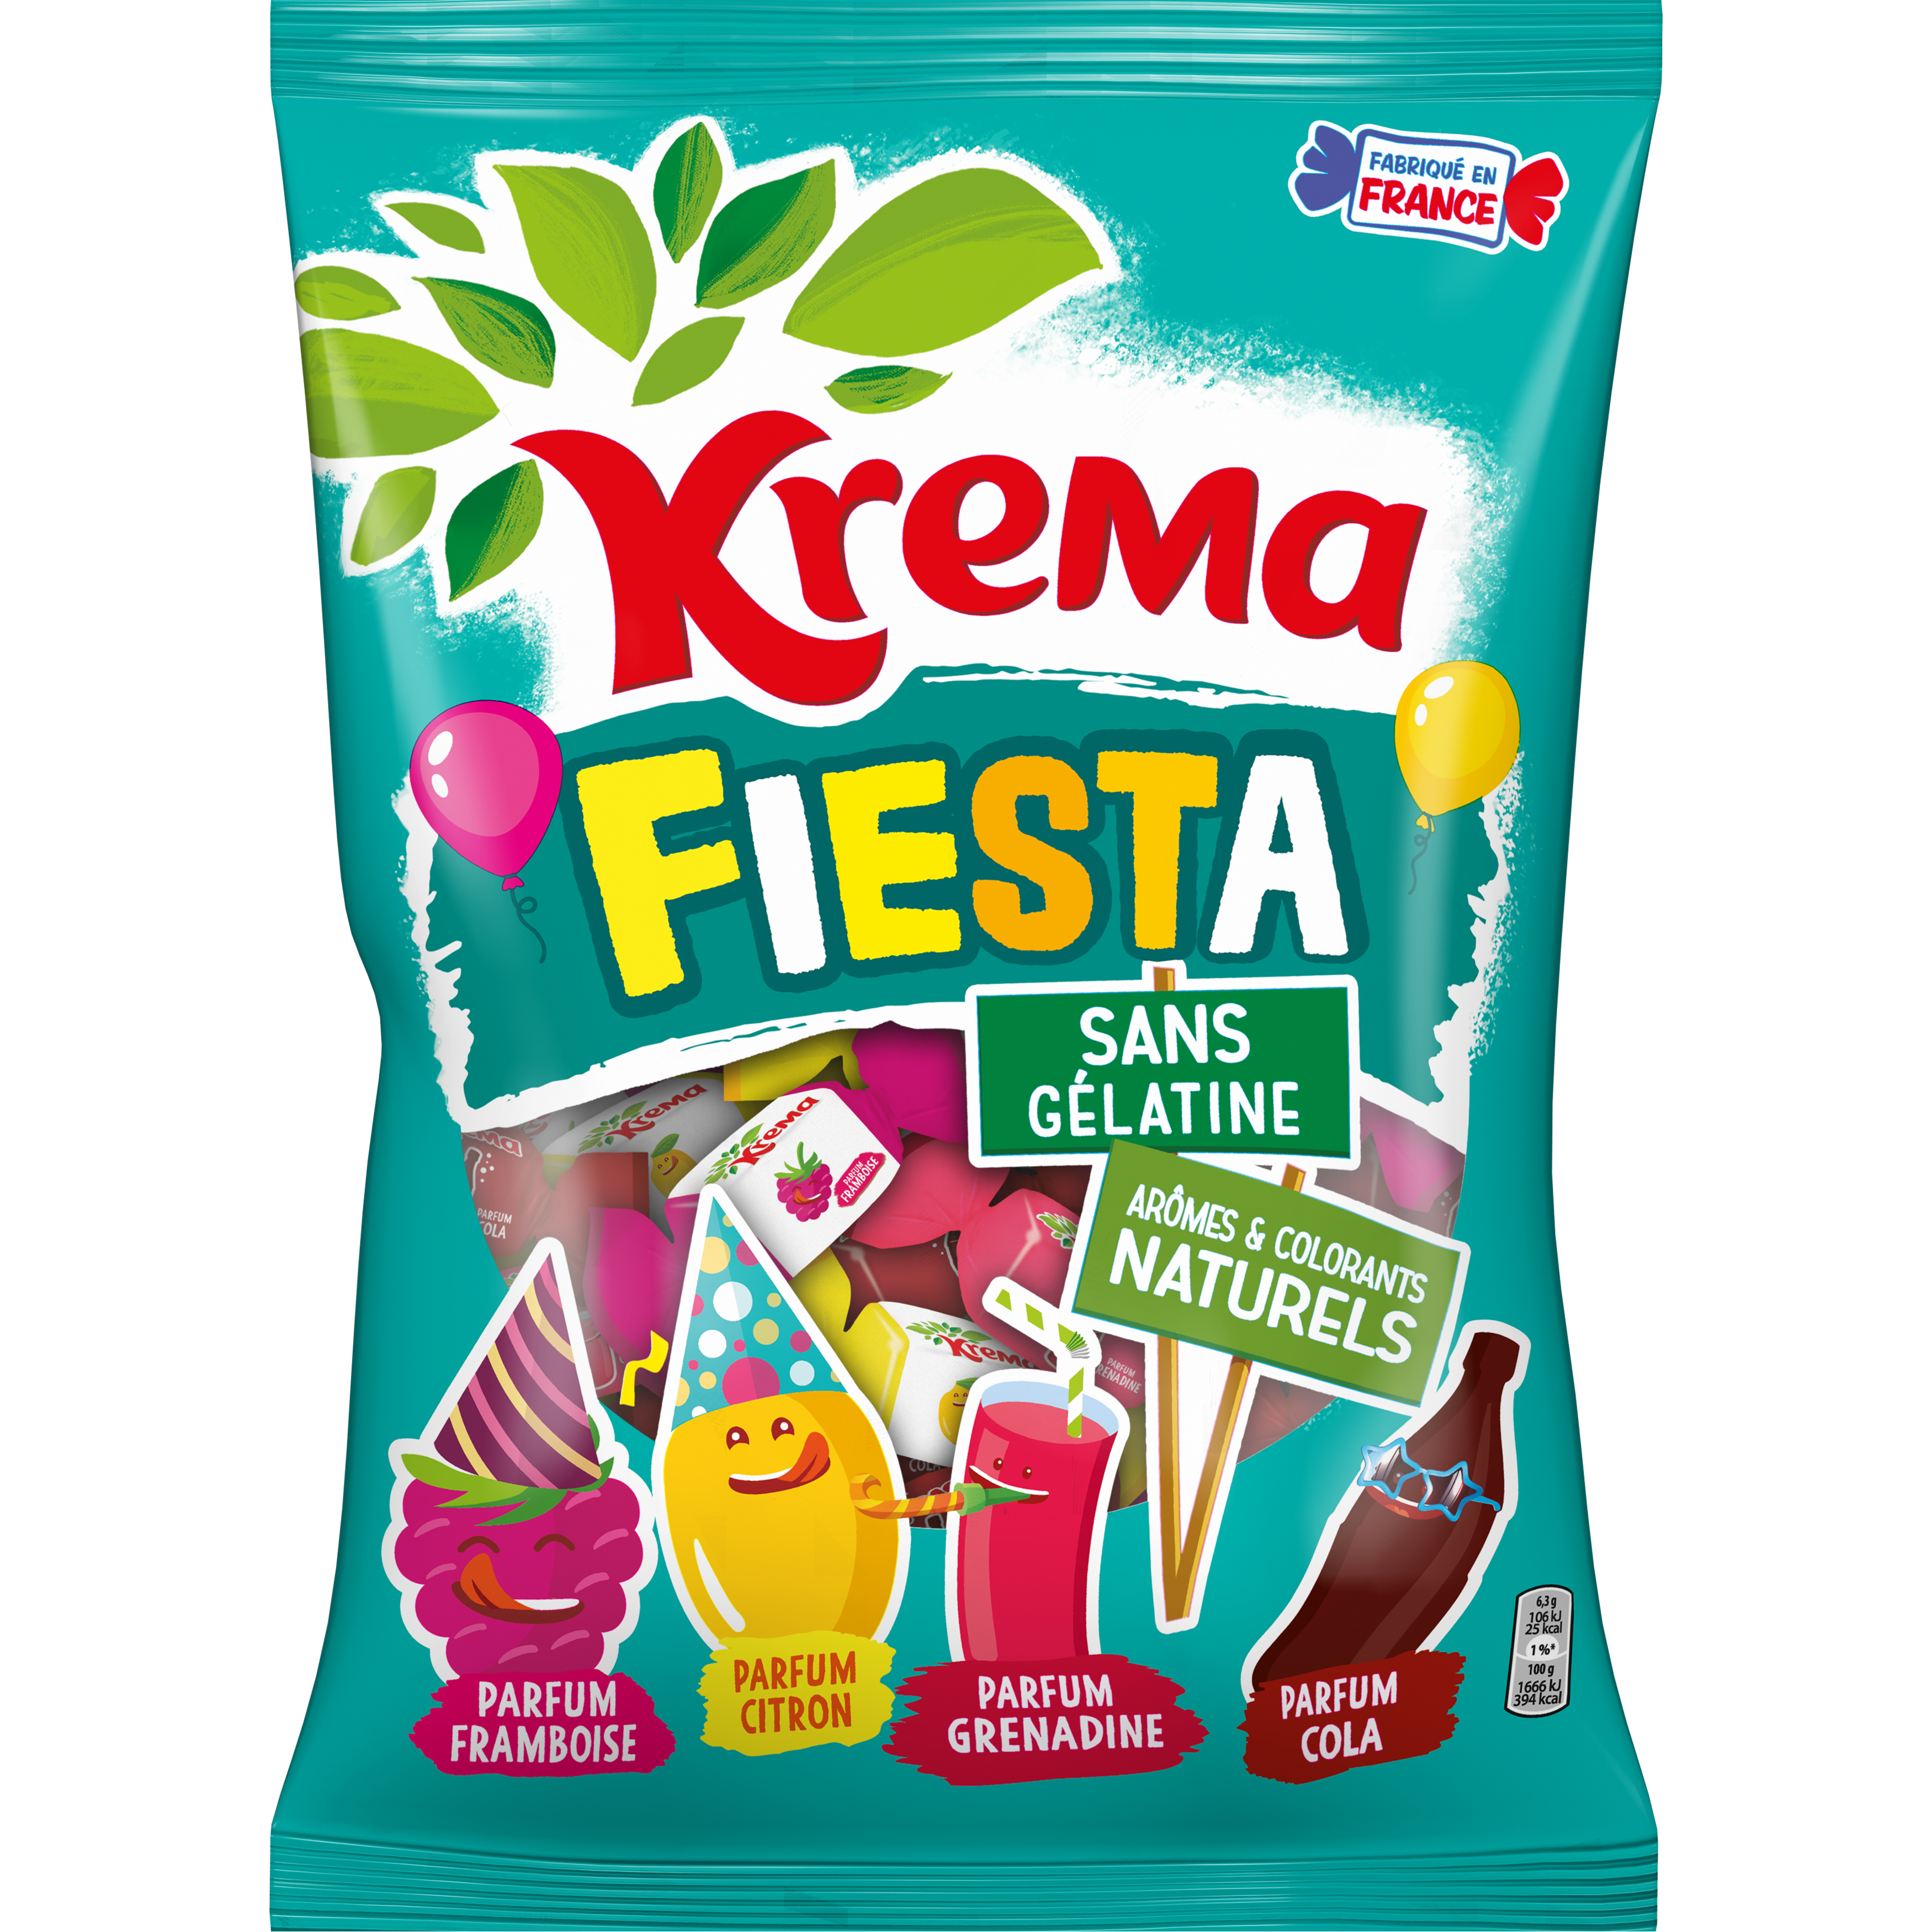 KREMA Fiesta assortiment de bonbons sans gélatine 580g pas cher 